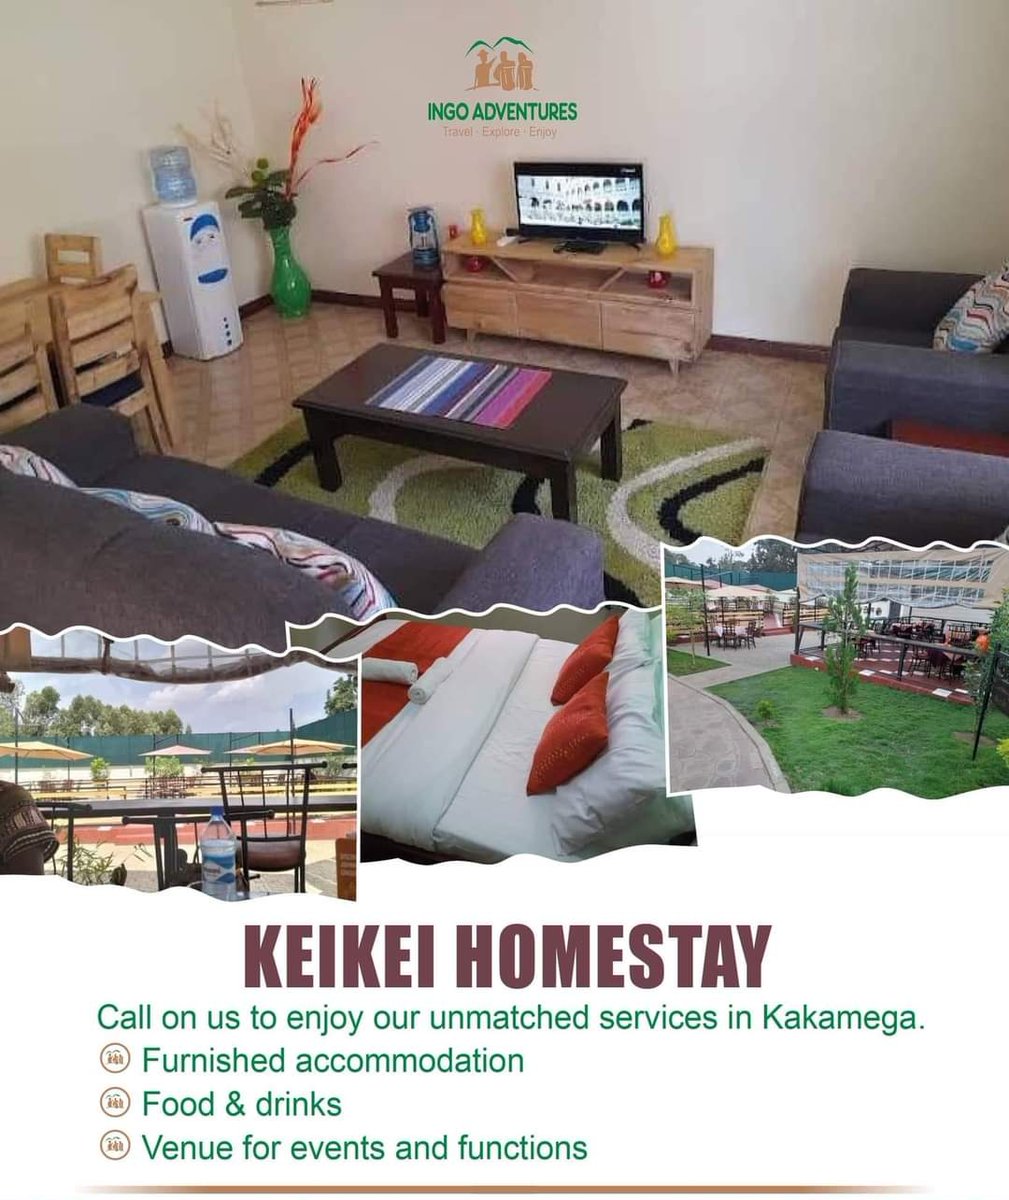 Call on us to enjoy our unmatched services in Kakamega.

▪️Furnished accommodation 
▪️Food & drinks
▪️Venue for events and functions

📌 KEIKEI HOMESTAY - KAKAMEGA 
#VisitWesternKenya #TwendeWestern #hospitality 
#travel #explore #enjoy #Kakamega #Tourism